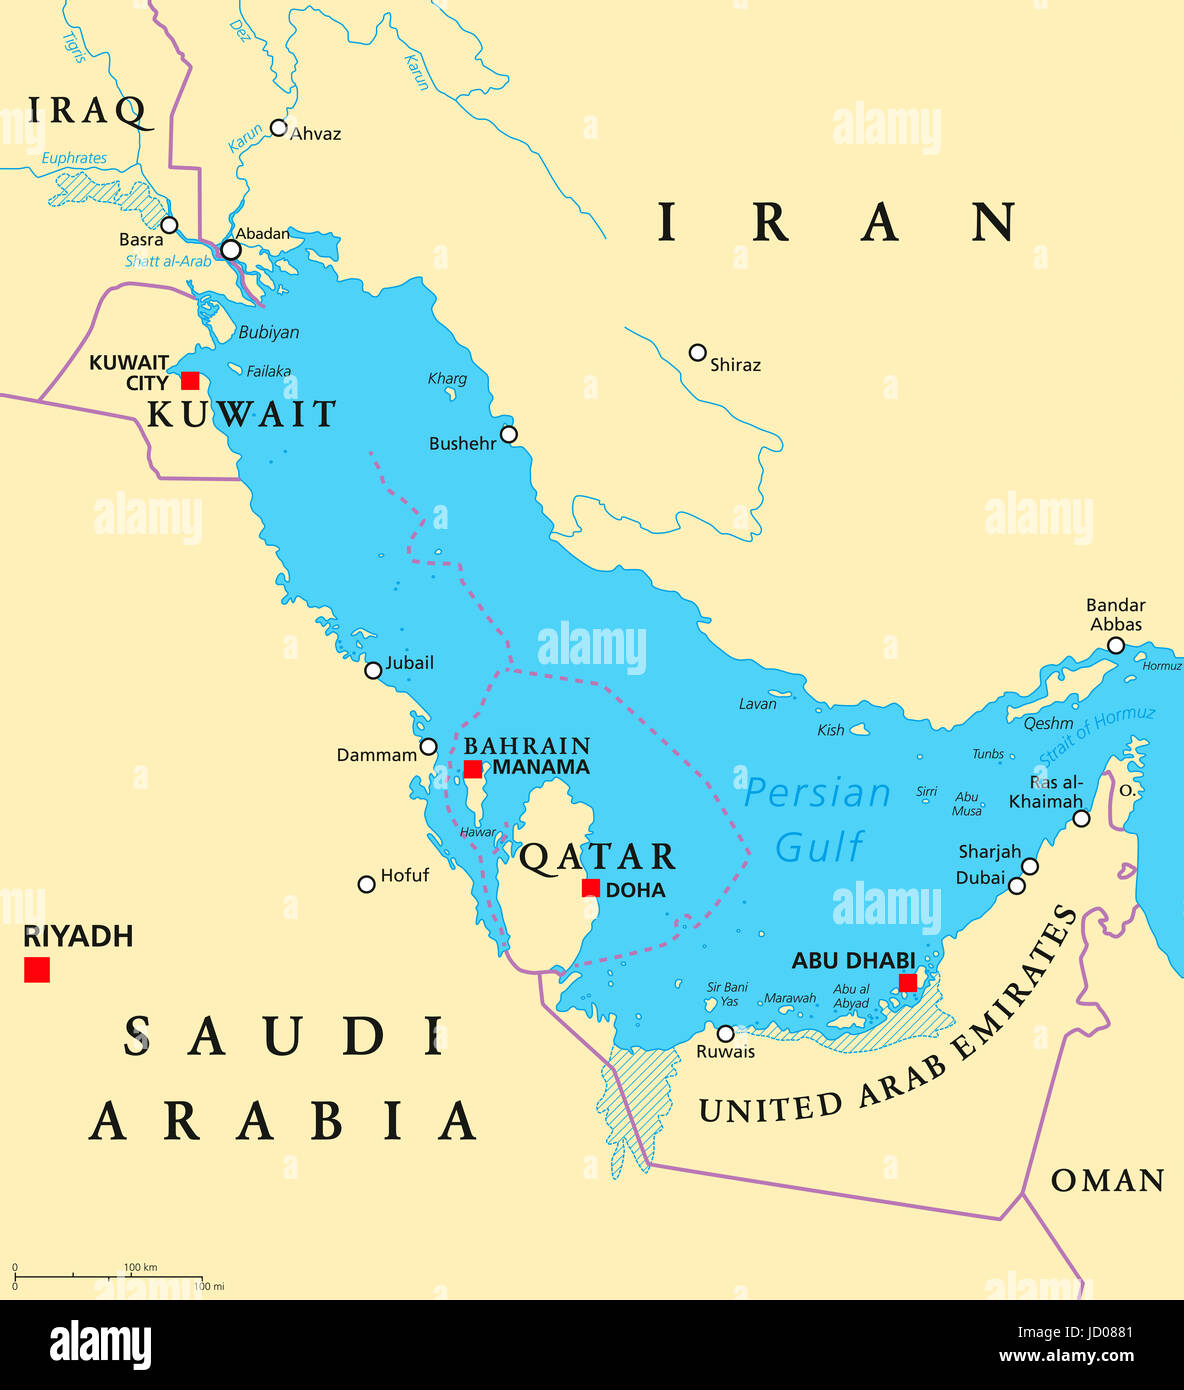 Zona del Golfo persico paesi mappa politico. Iran, Iraq, Kuwait, Qatar, Bahrein, Emirati Arabi Uniti, Arabia Saudita, Oman. Illustrazione. Inglese. Foto Stock